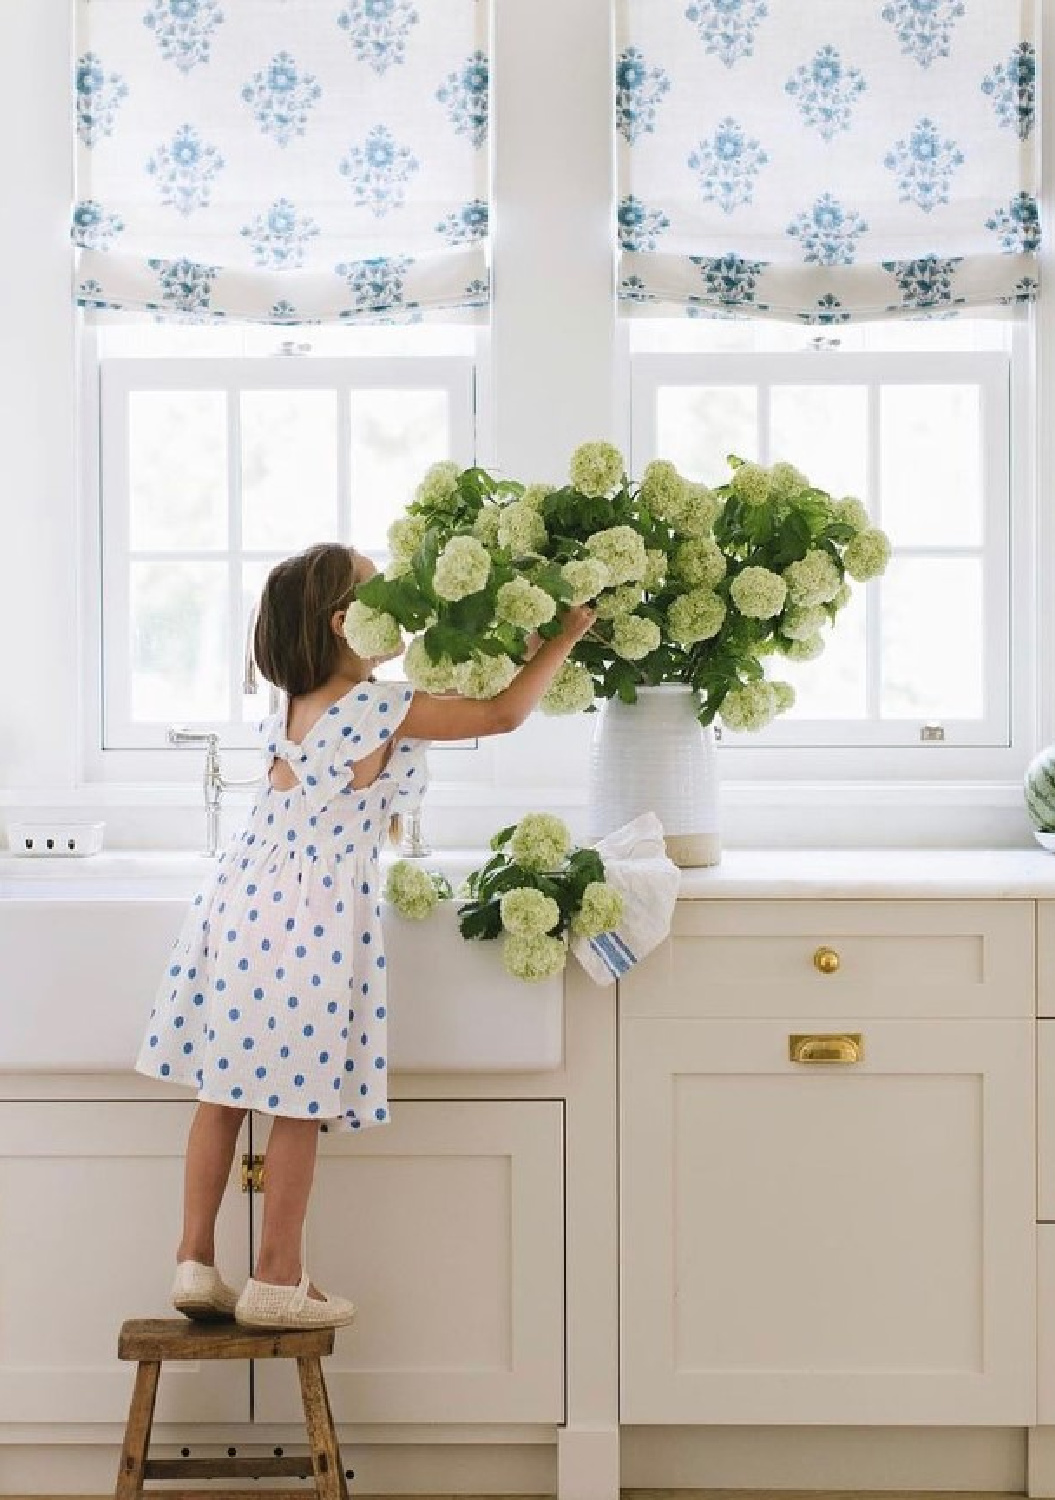 Schumacher 1889 fabric on roman shades in a beautiful white kitchen with farm sink, little girl in polka dot dress, and vase of limelight hydrangeas. #blueandwhitekitchen